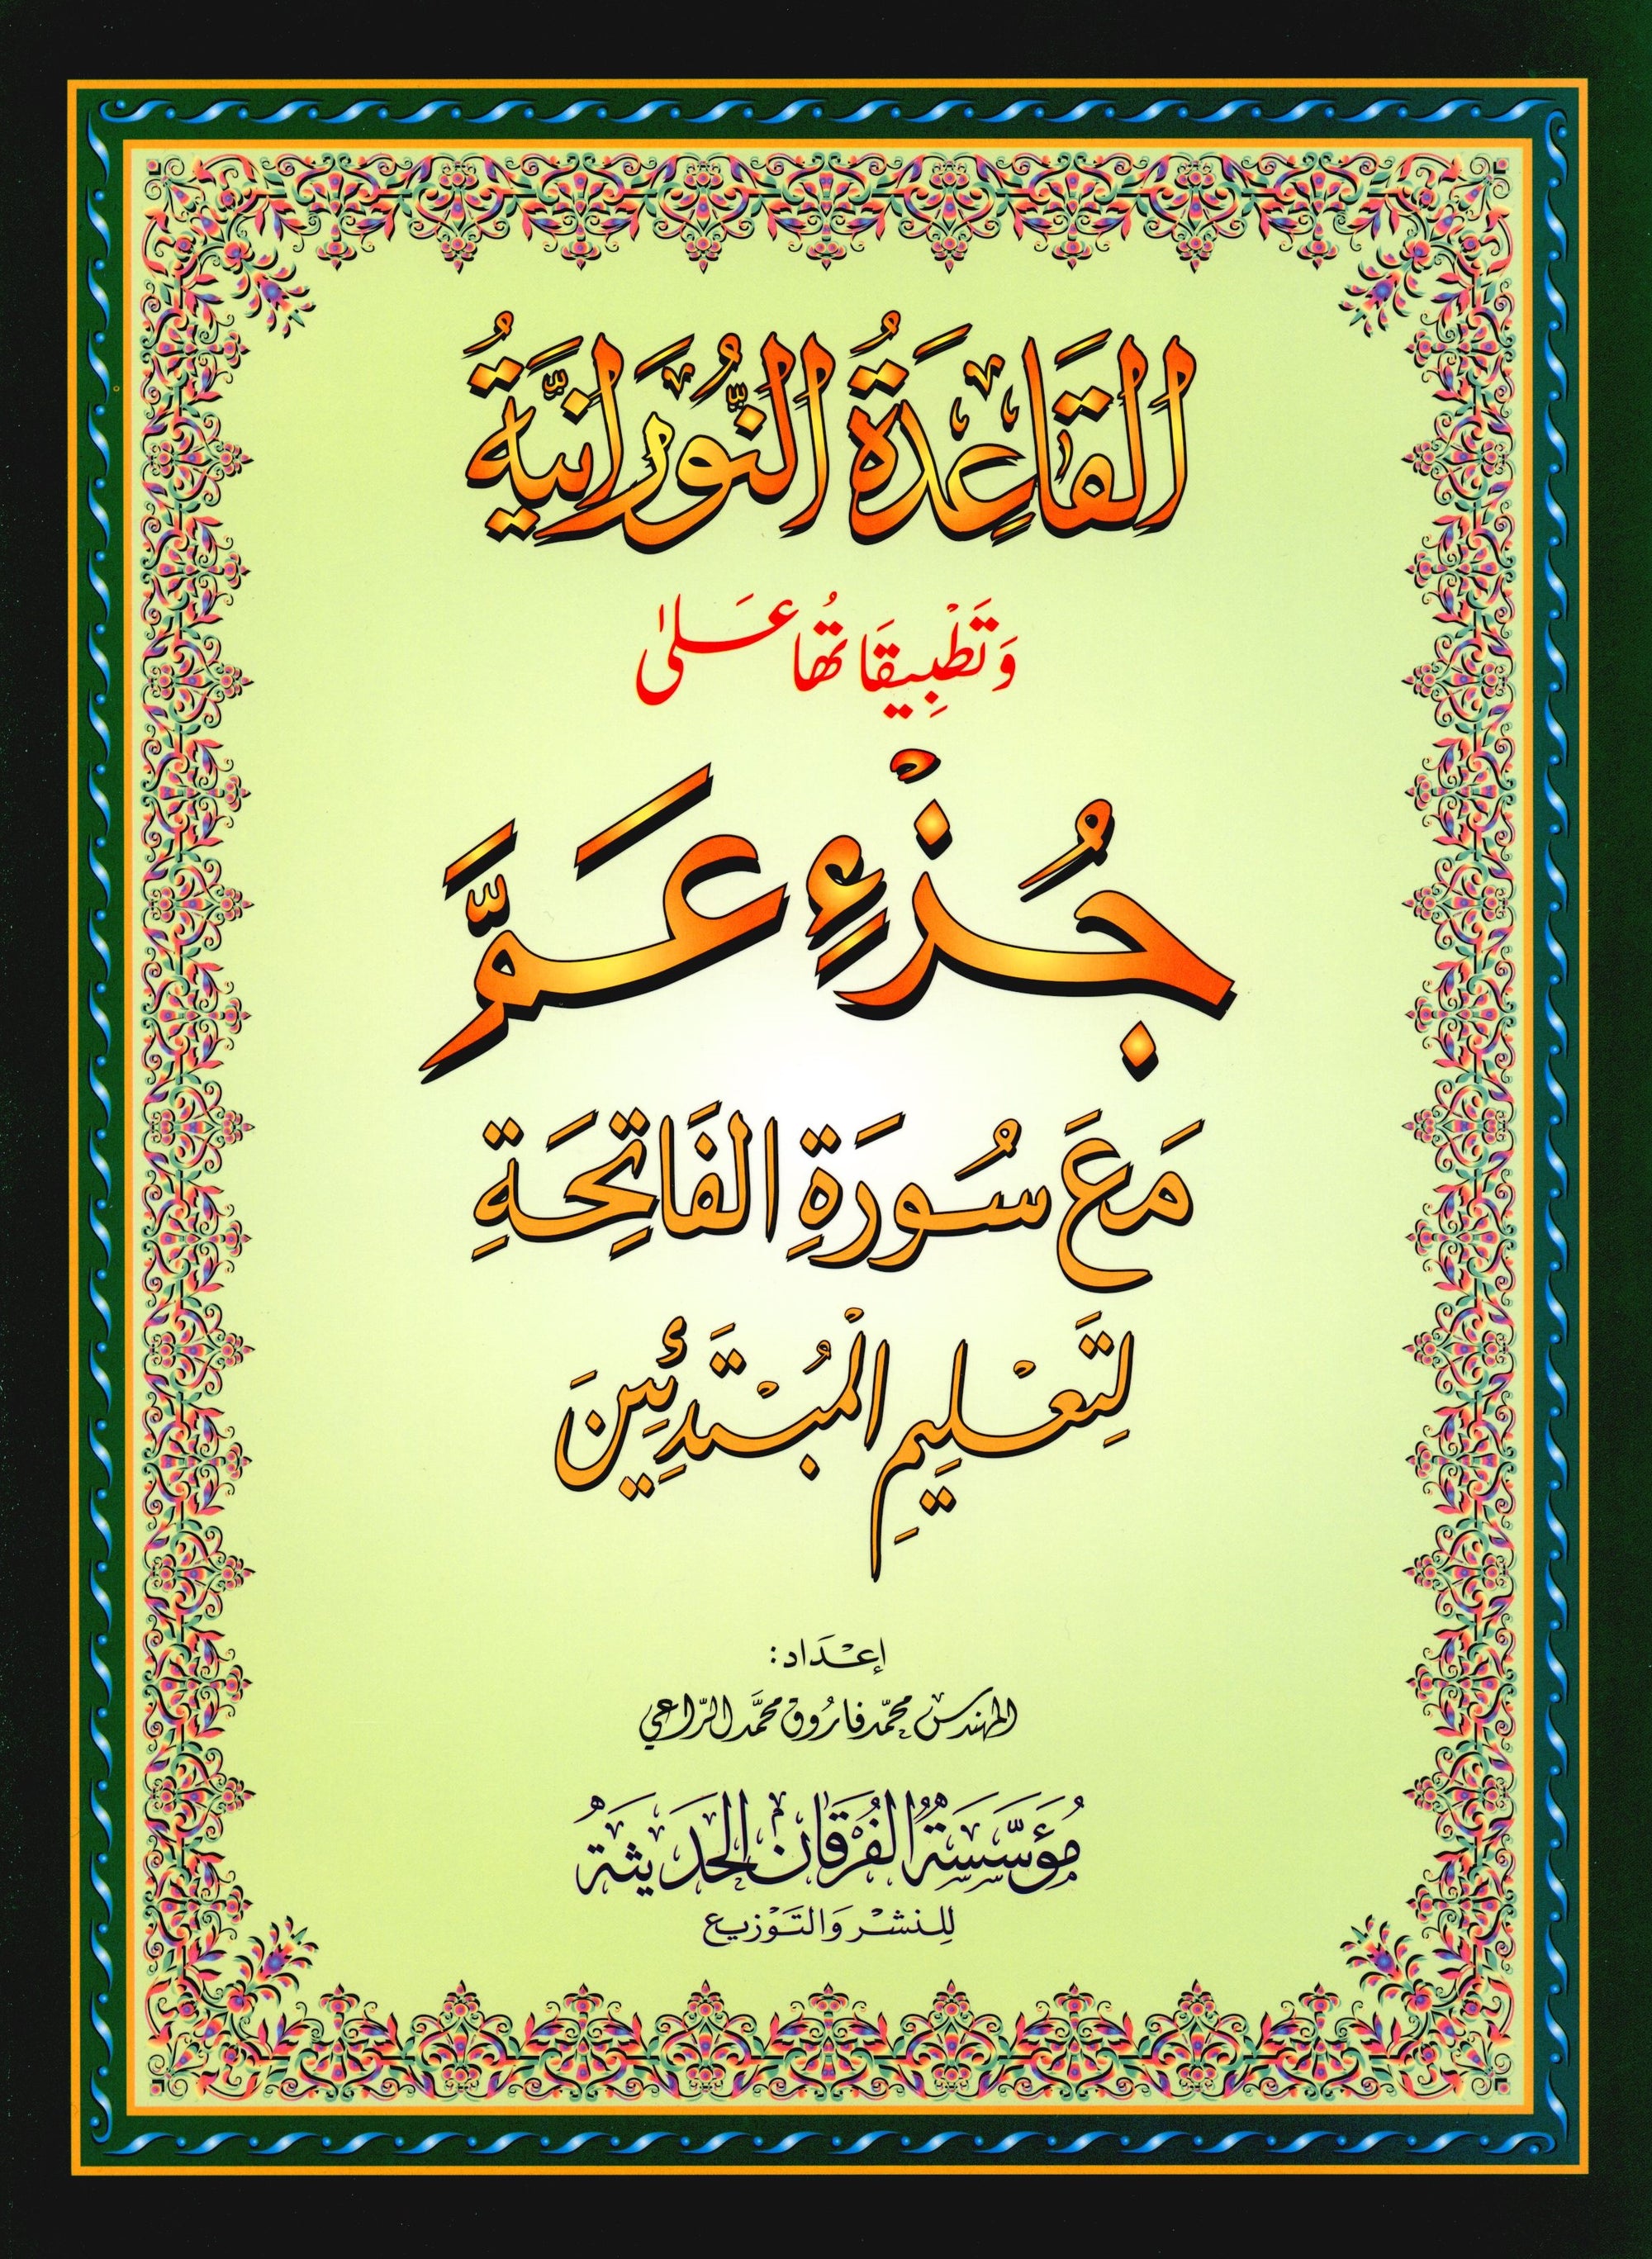 Al-Qaidah An-Noraniah - Juz’ Amma & Suratul-Fatihah for Beginners Large Size 7 x 9 جزء عم مع سورة الفاتحة للمبتدئين